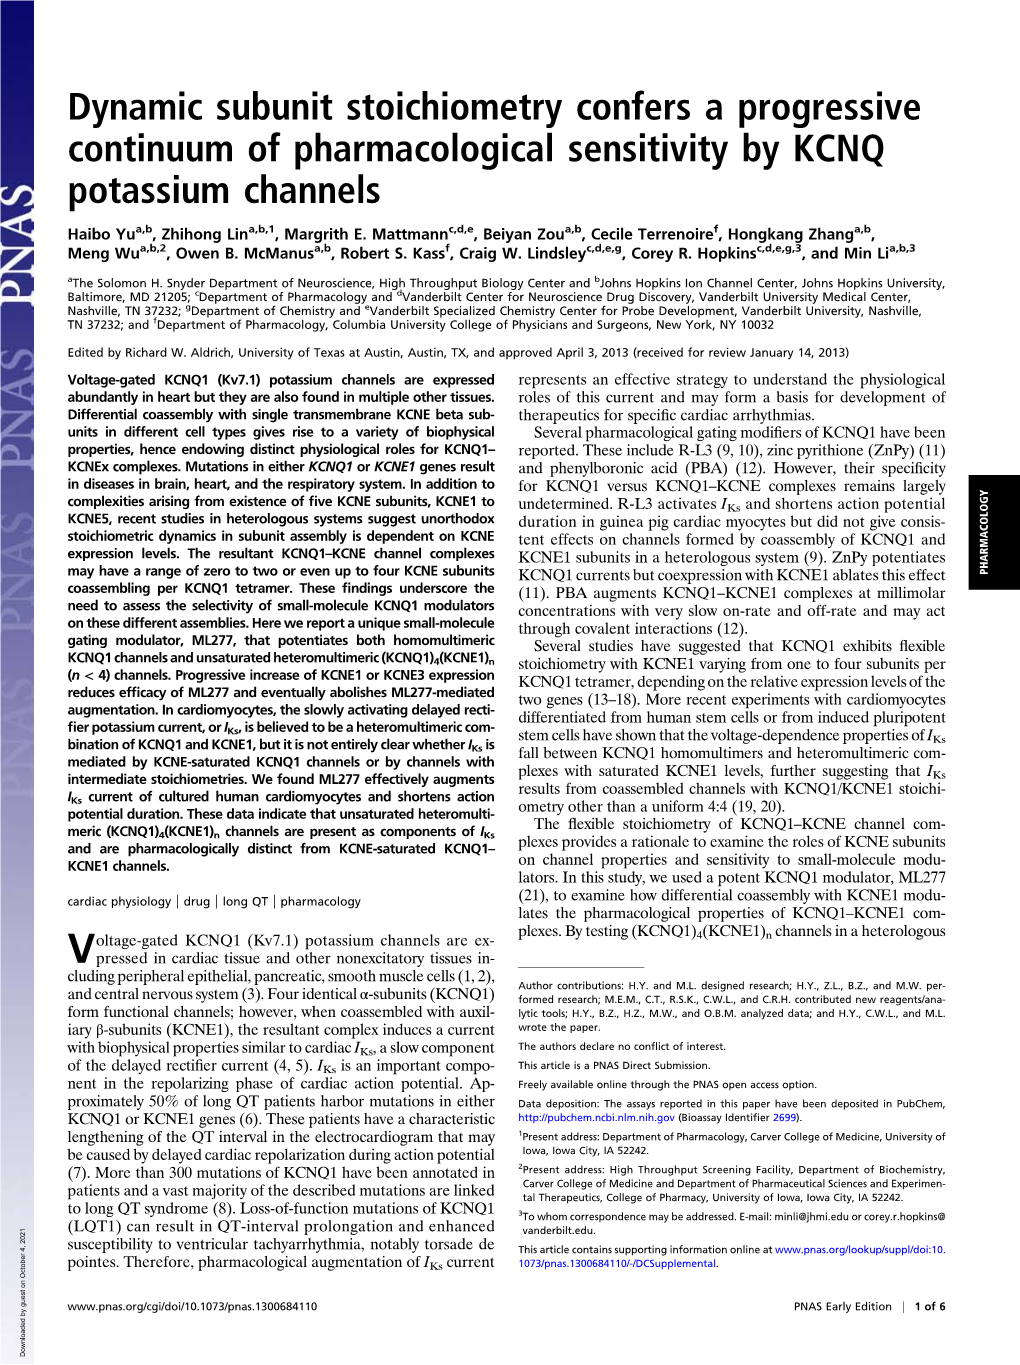 Dynamic Subunit Stoichiometry Confers a Progressive Continuum of Pharmacological Sensitivity by KCNQ Potassium Channels